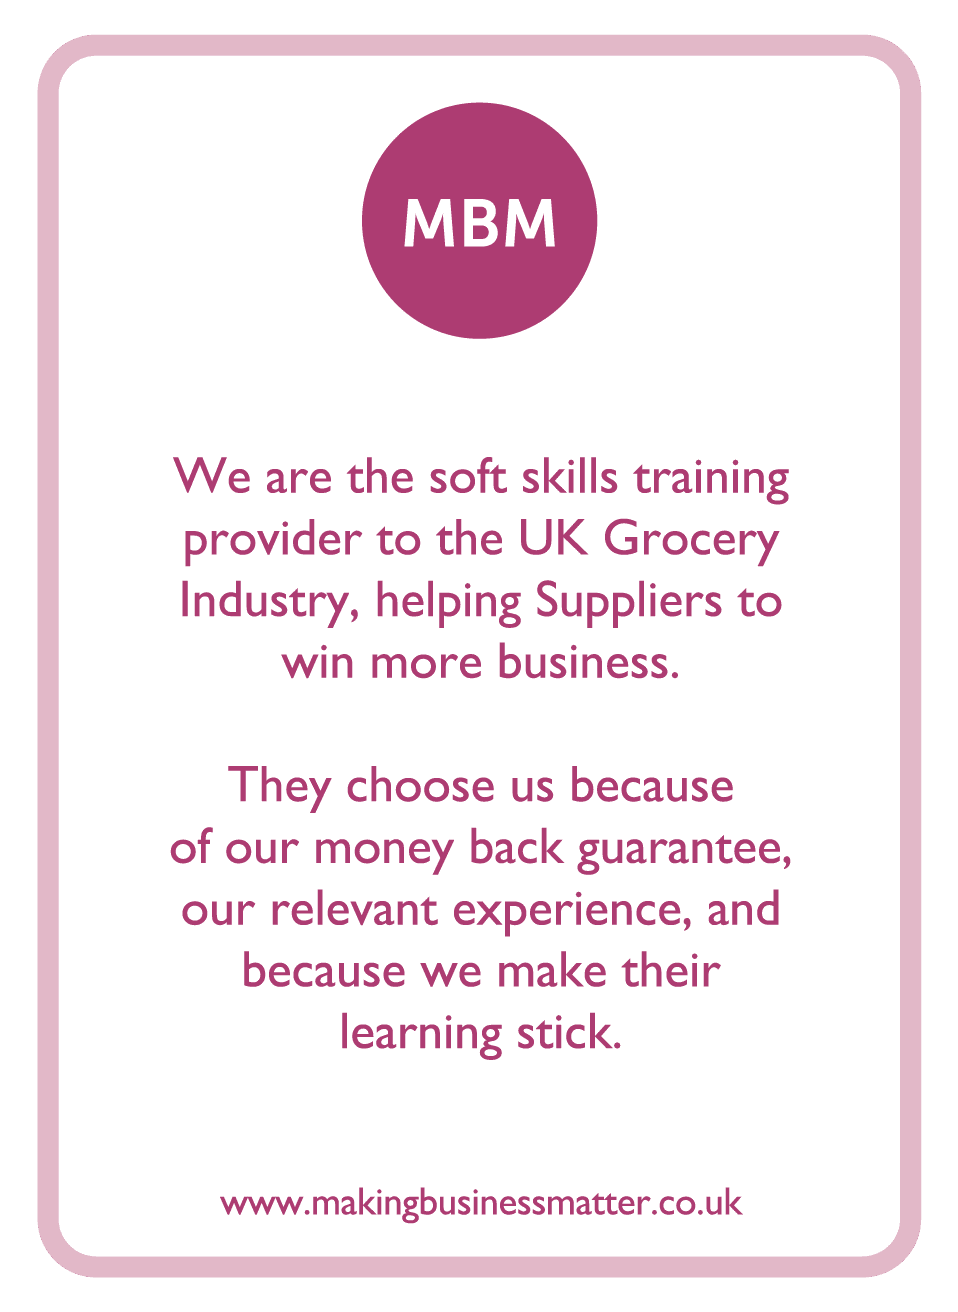 Category management coaching card titled MBM